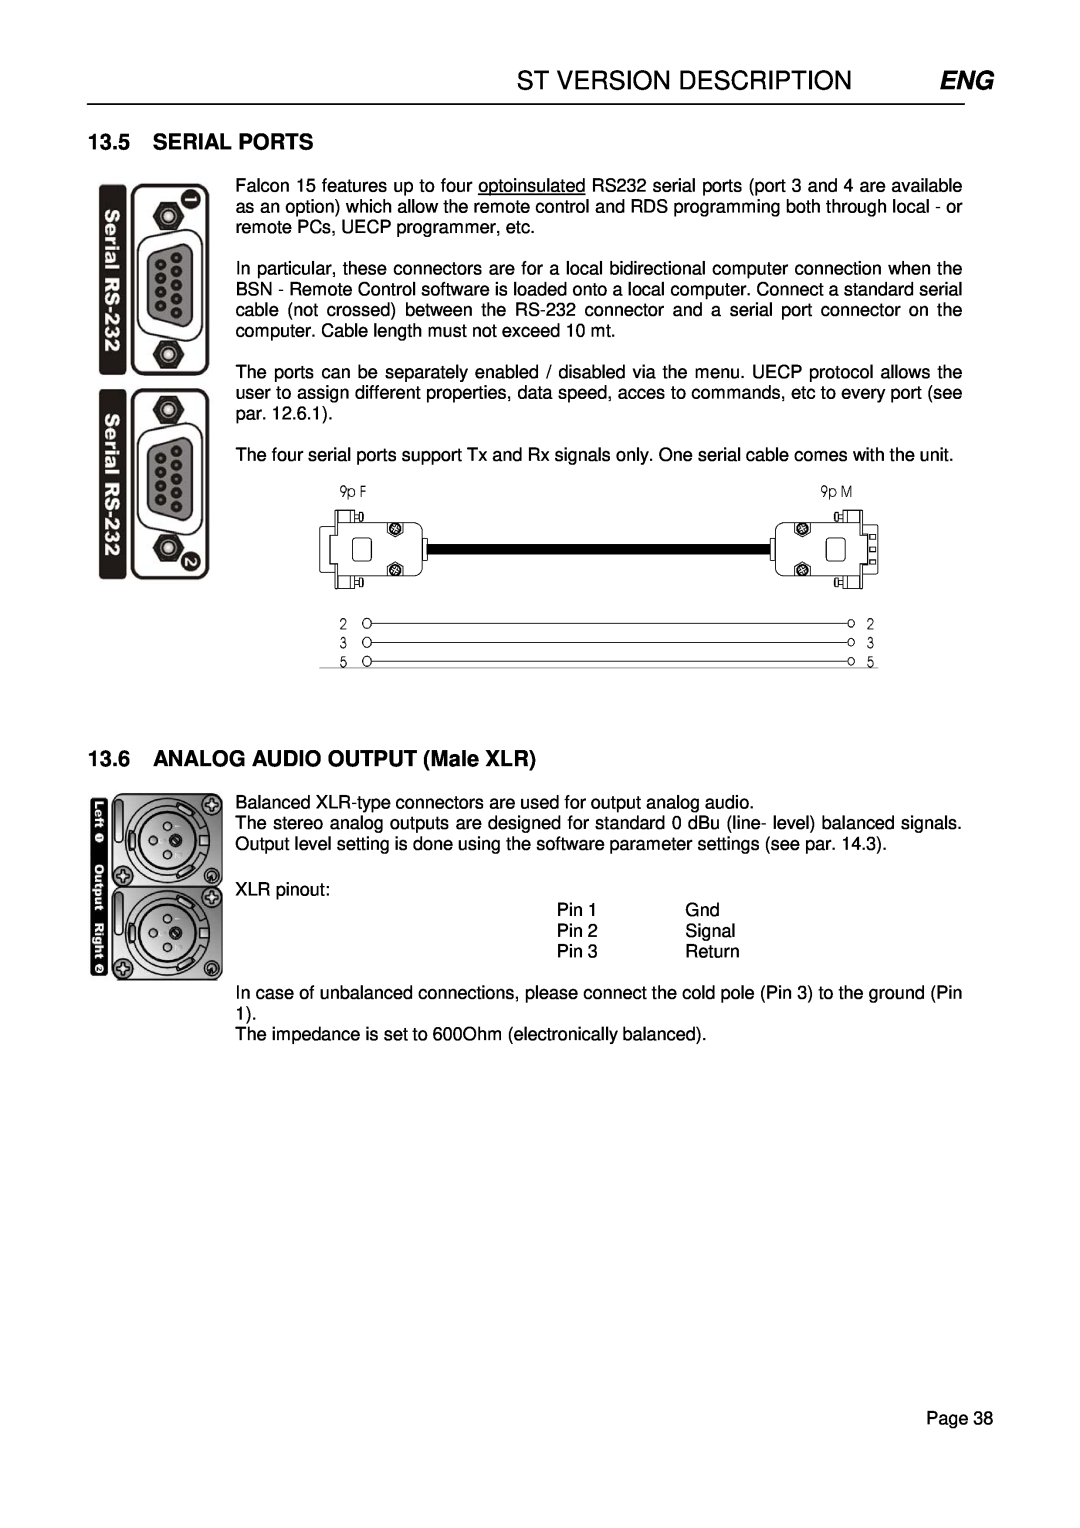 Falcon 15 manual St Version Description, 13.5SERIAL PORTS, 13.6ANALOG AUDIO OUTPUT Male XLR 